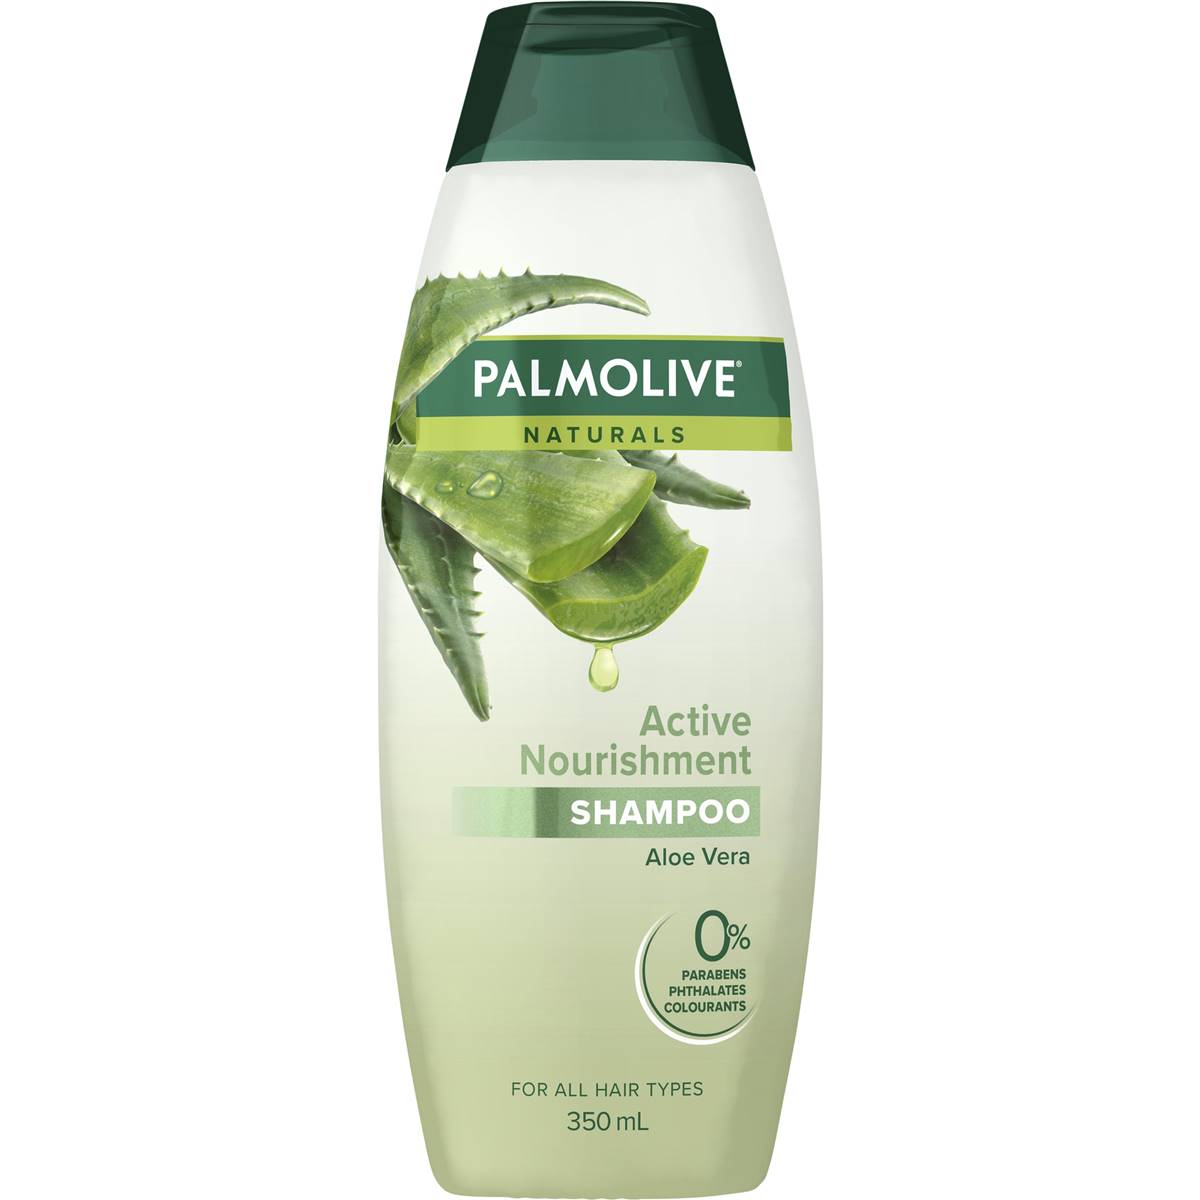 Palmolive Shampoo Active Nourishment 350ml